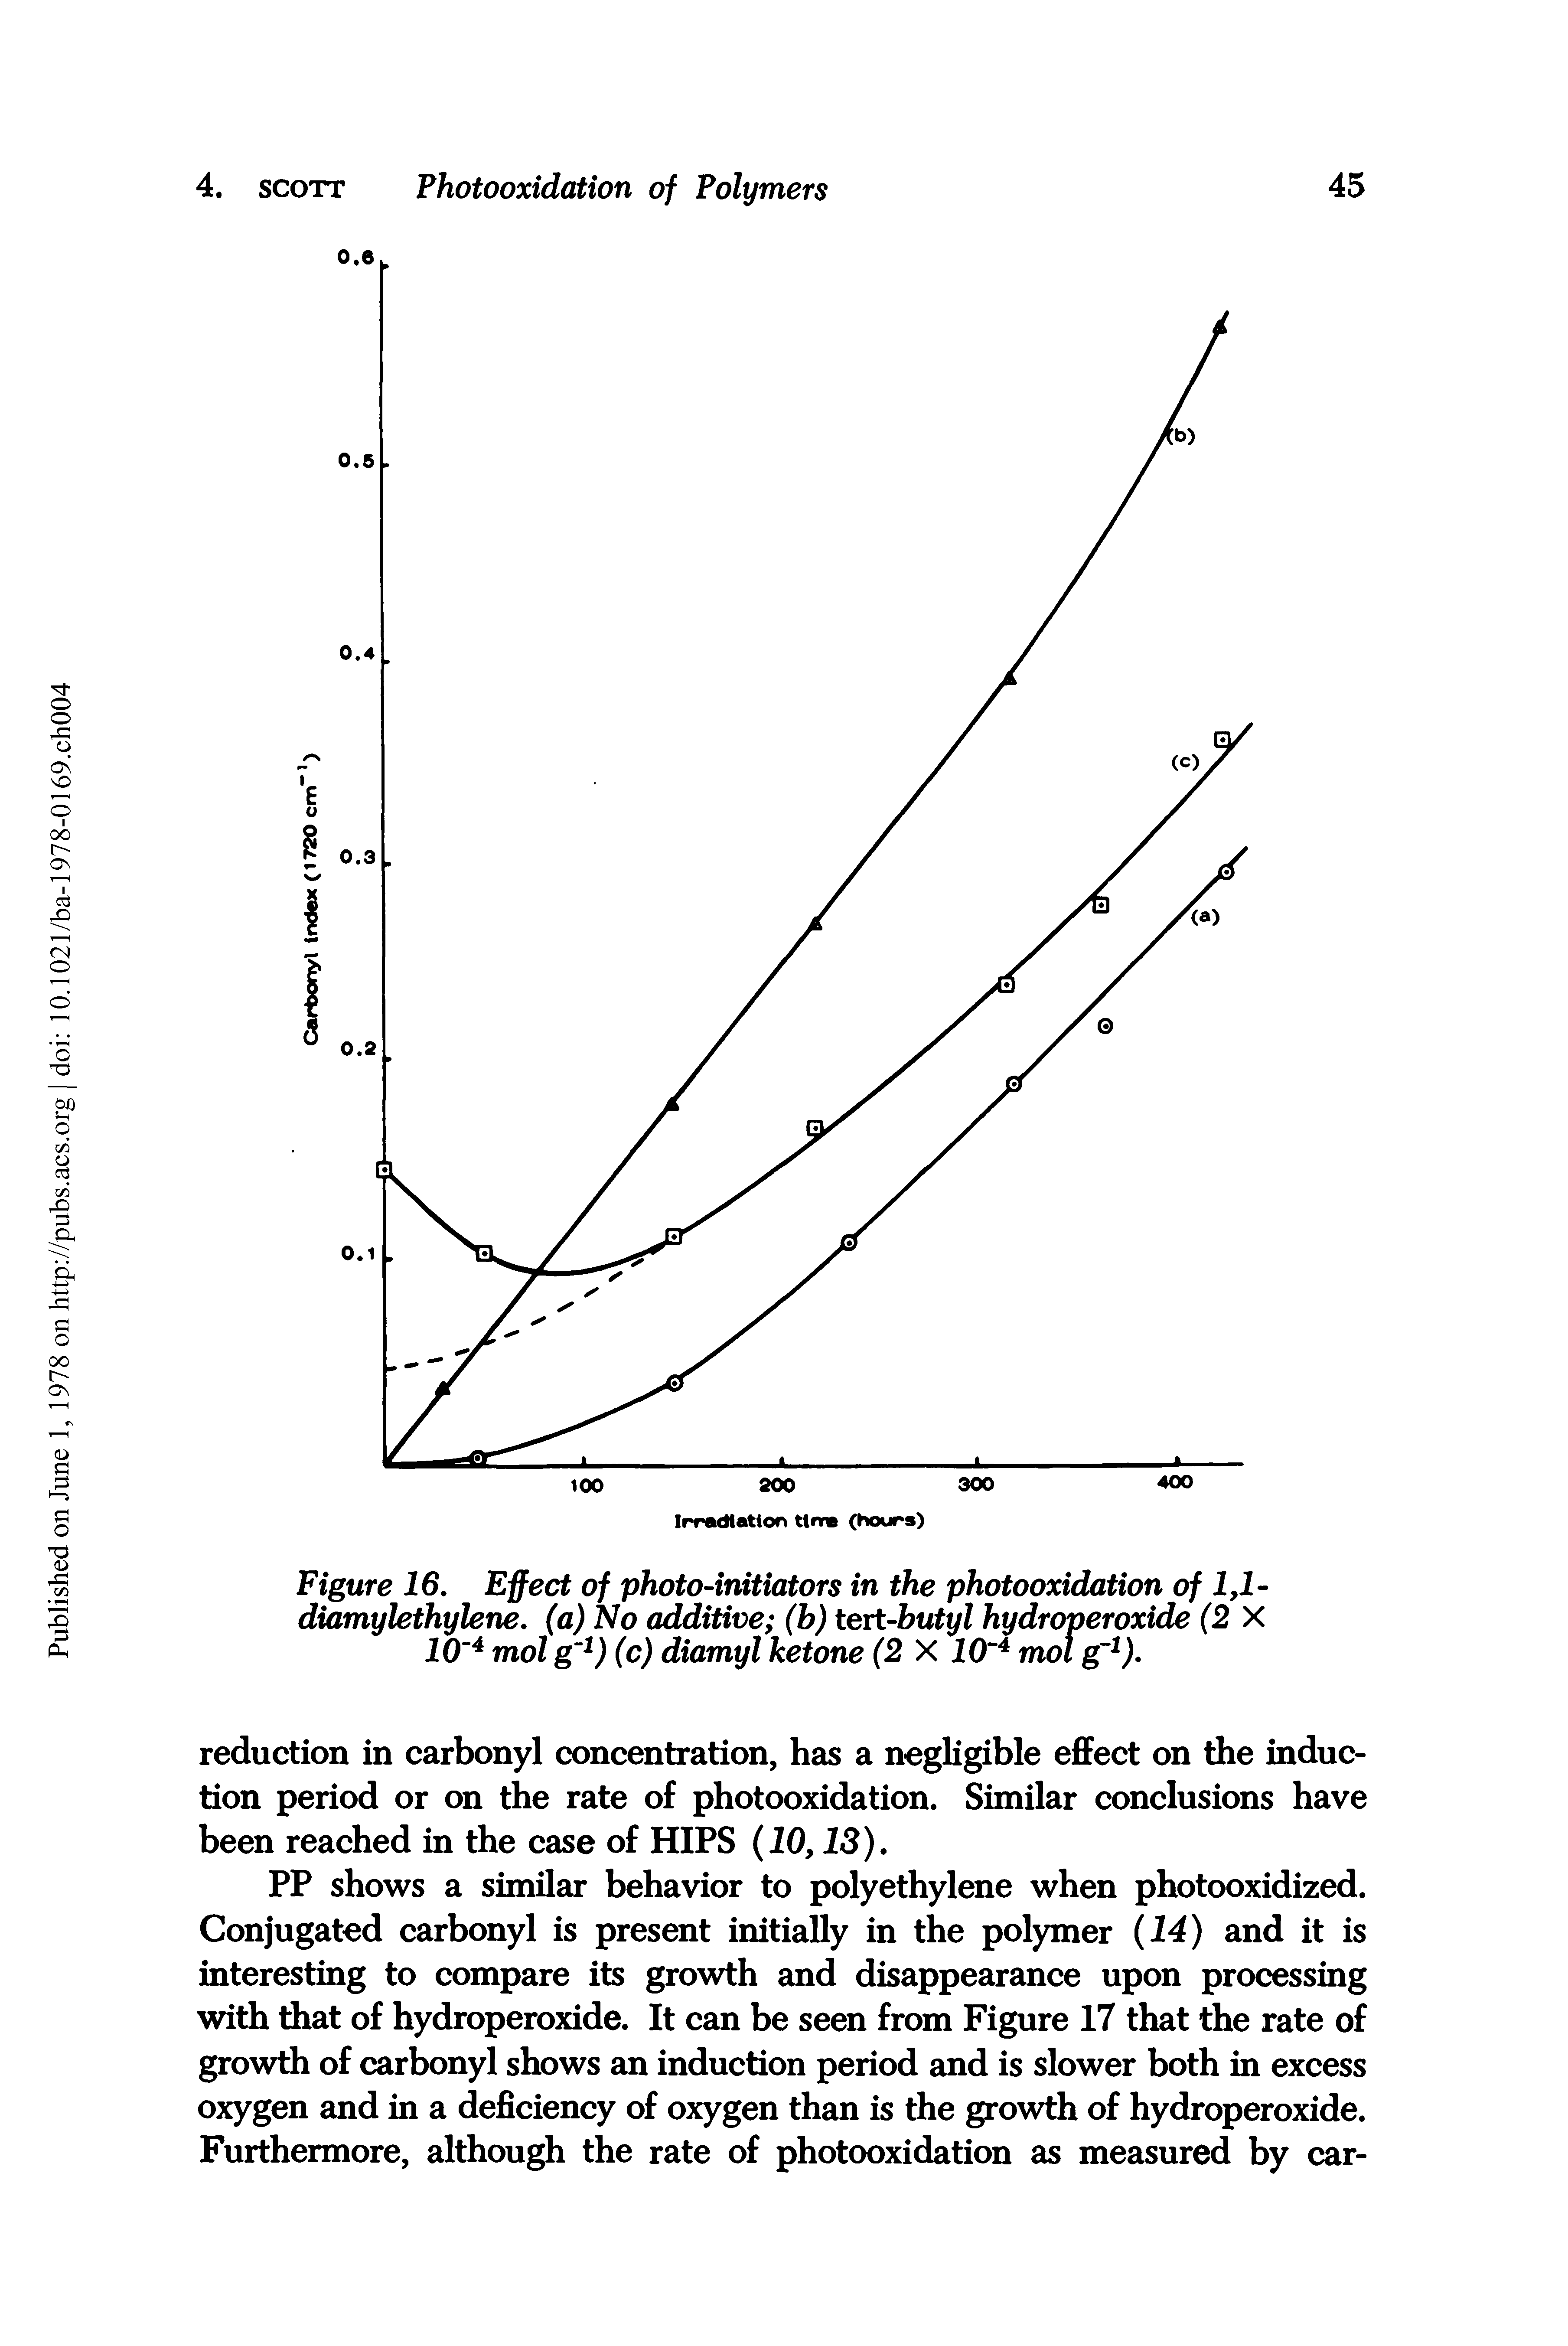 Figure 16. Effect of photo-initiators in the photooxidation of 1,1-diamylethylene. (a) No additive (b) tert-butyl hydroperoxide (2 X 10"4 mol g 1) (c) diamyl ketone (2 X 10 4 mot g"1).